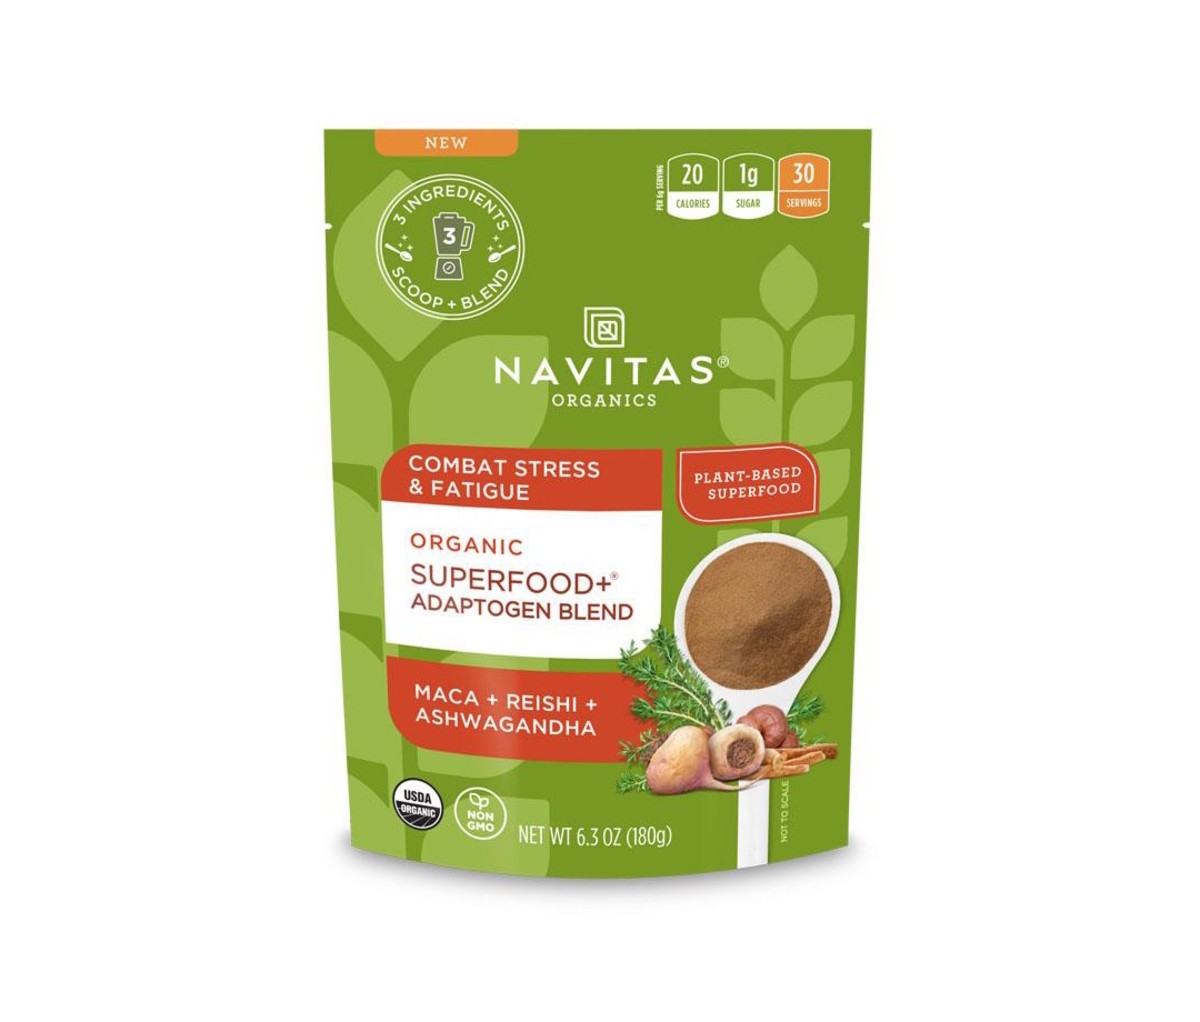 Navitas Organics Superfood+ Adaptogen Blend